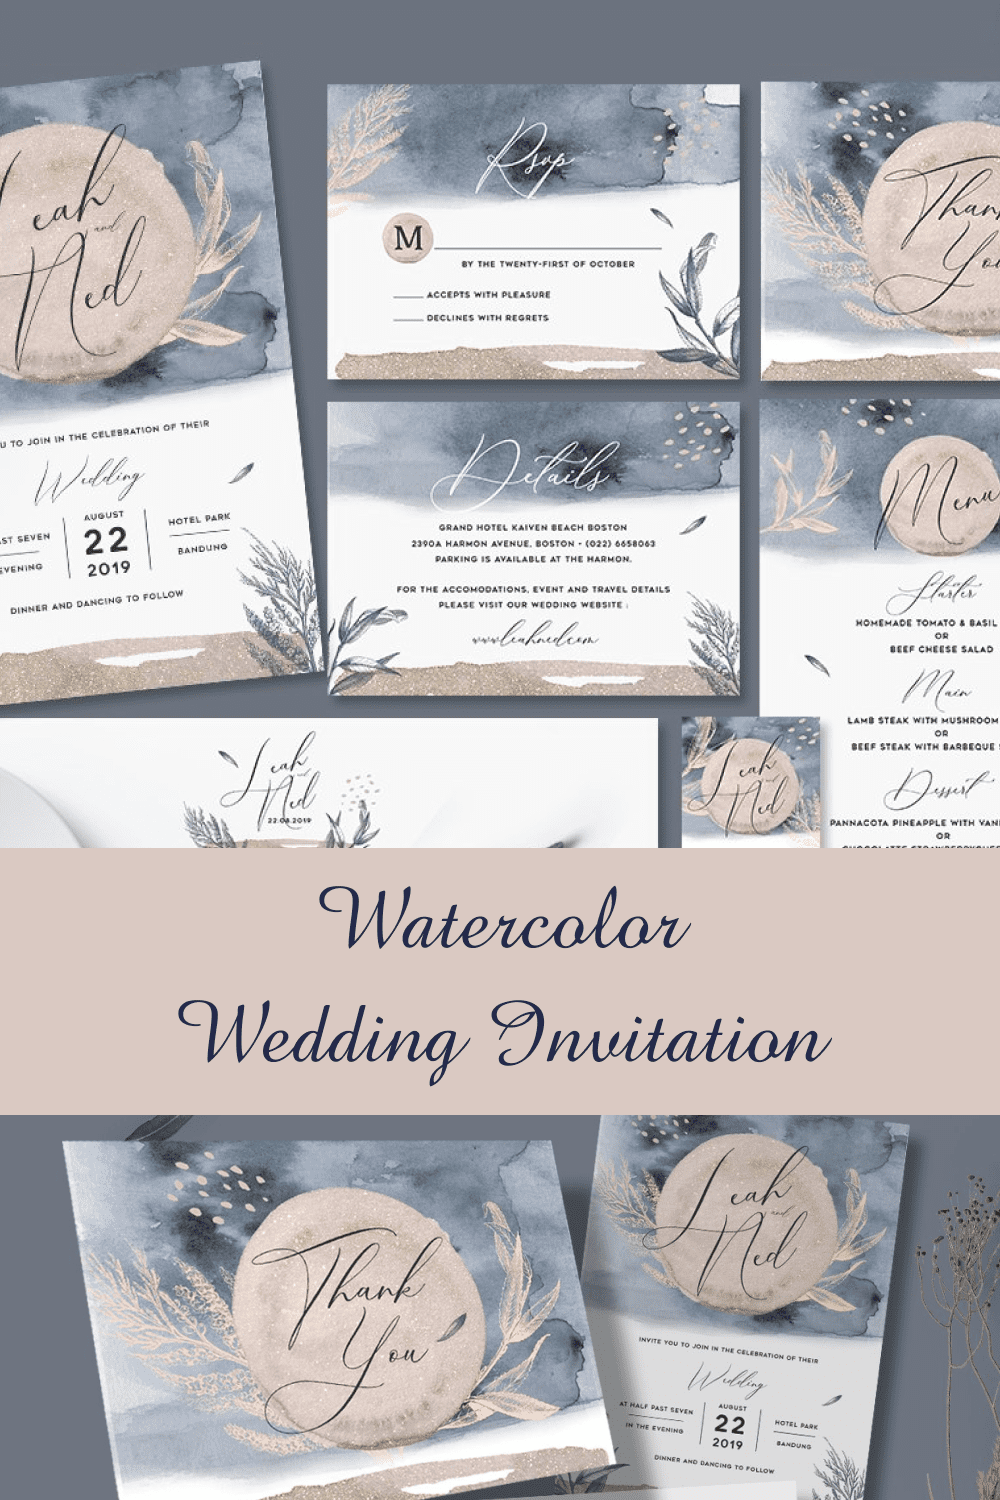 Watercolor Wedding Invitation pinterest image.